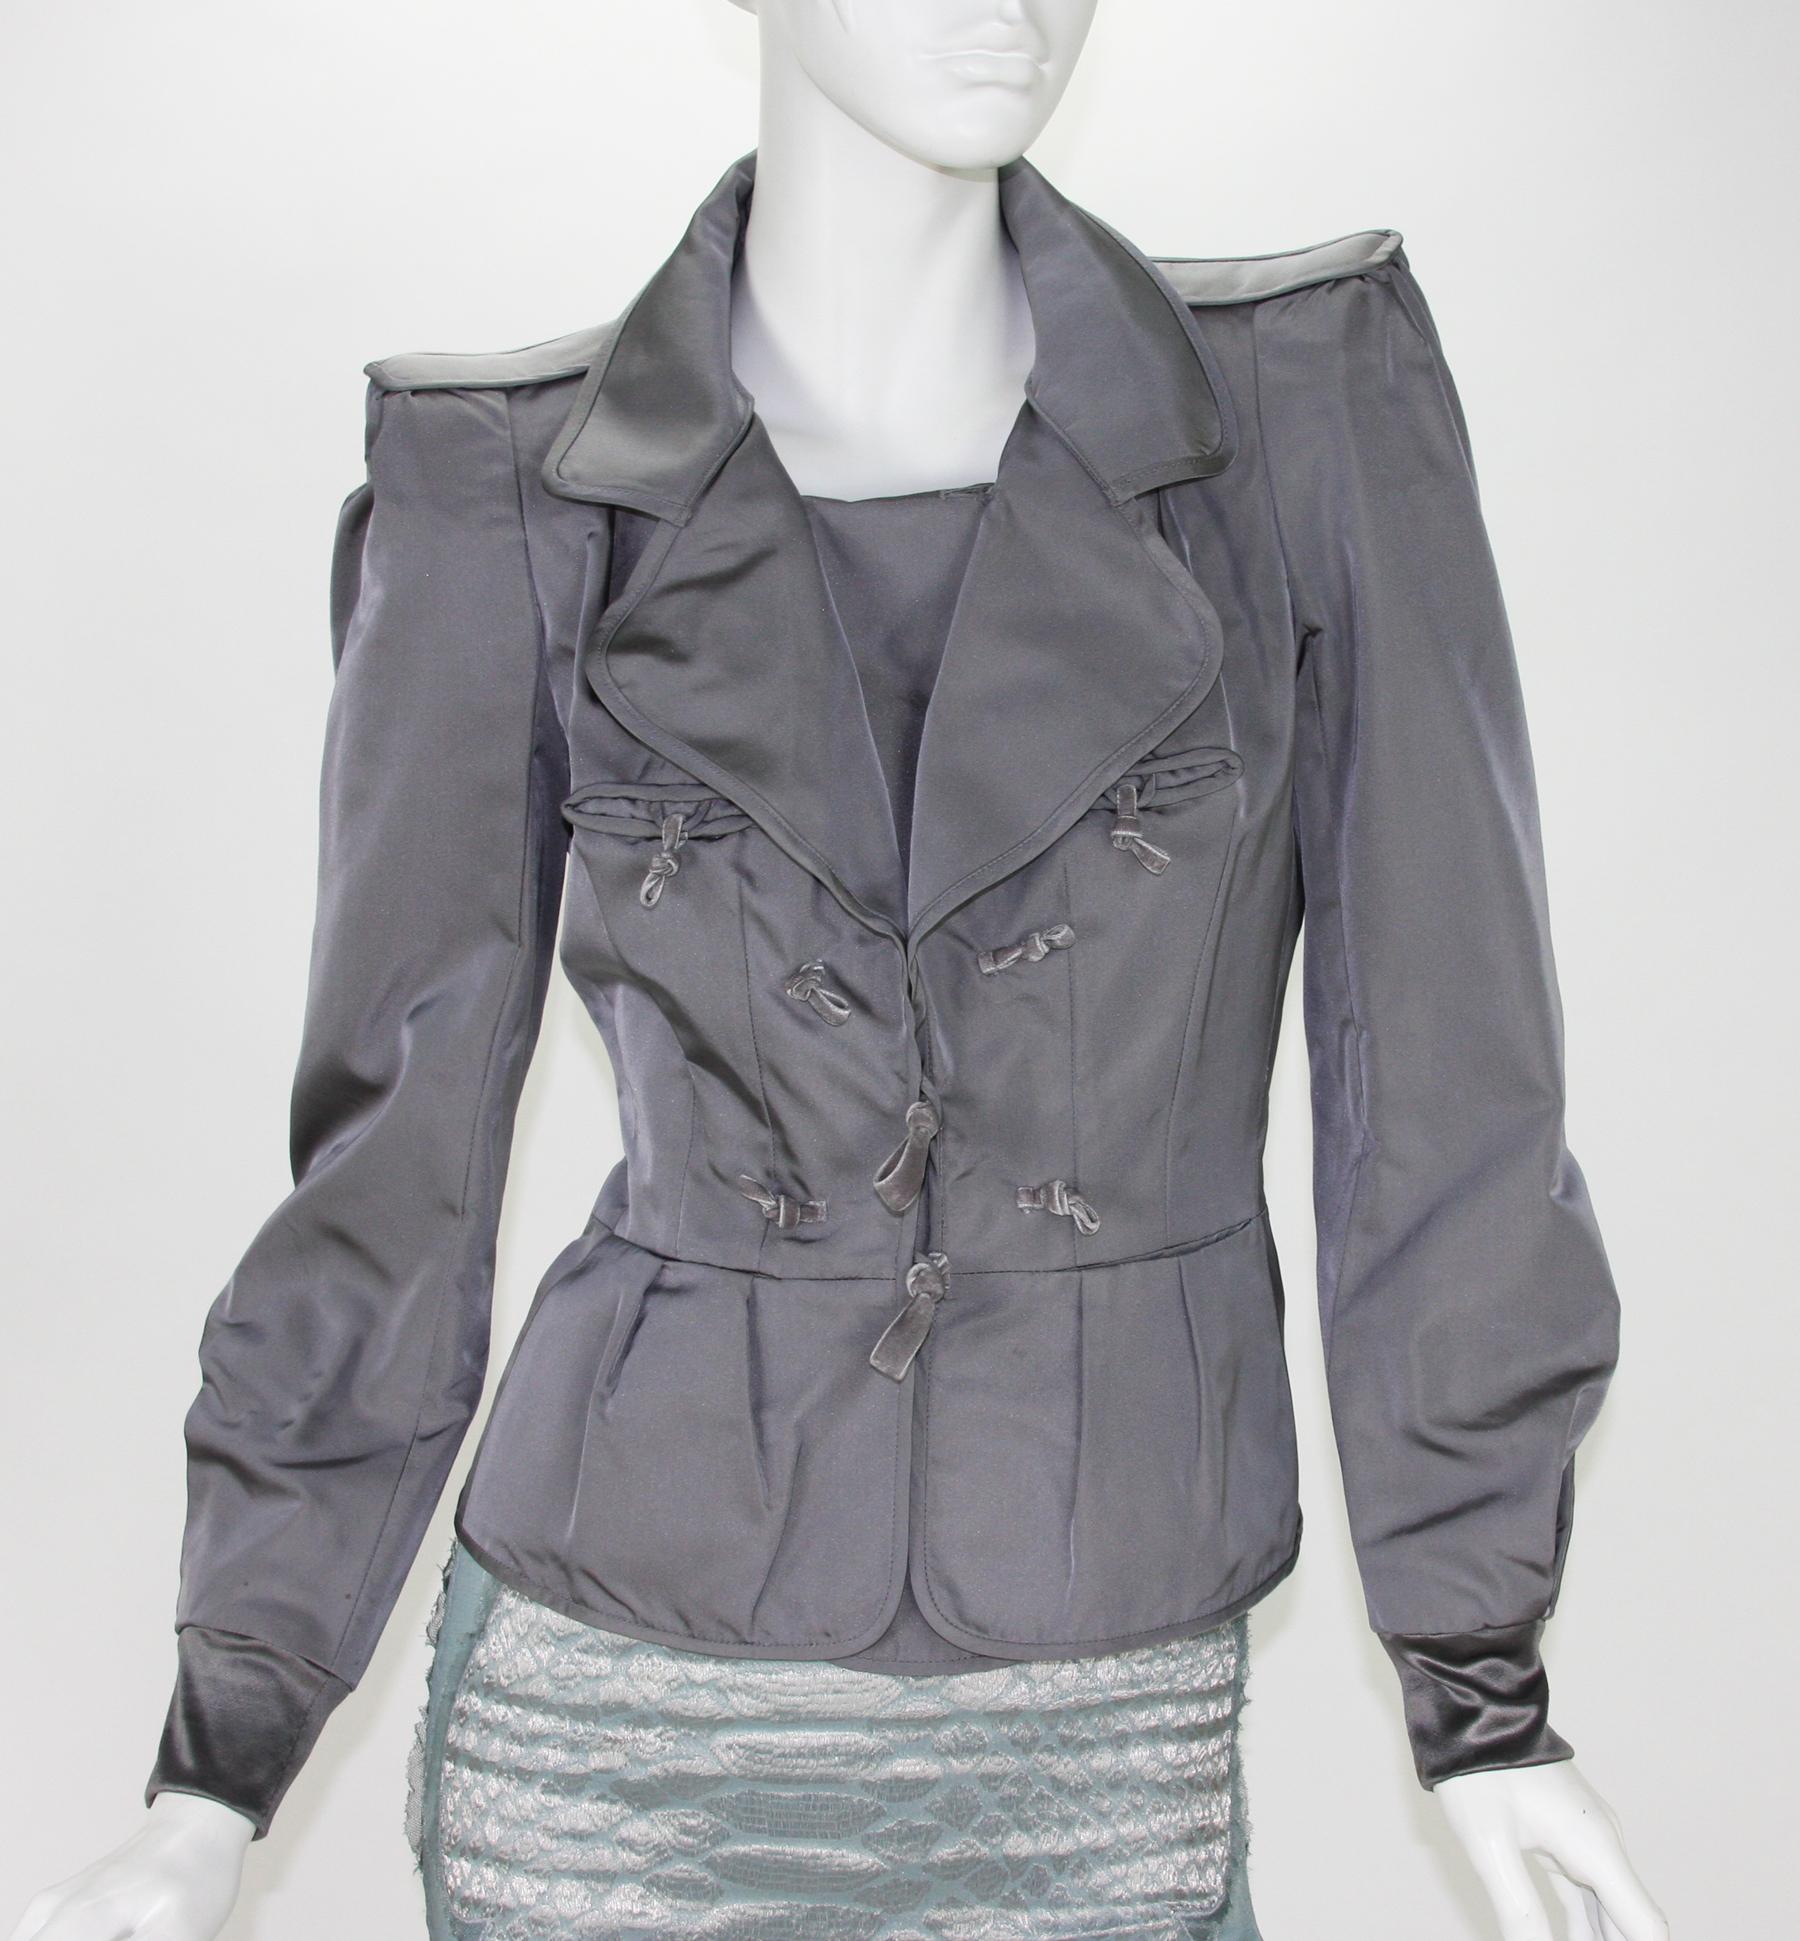 Tom Ford for Yves Saint Laurent F/W 2004 Silk Pagoda Jacket Skirt Suit Fr 38 - 6 For Sale 4